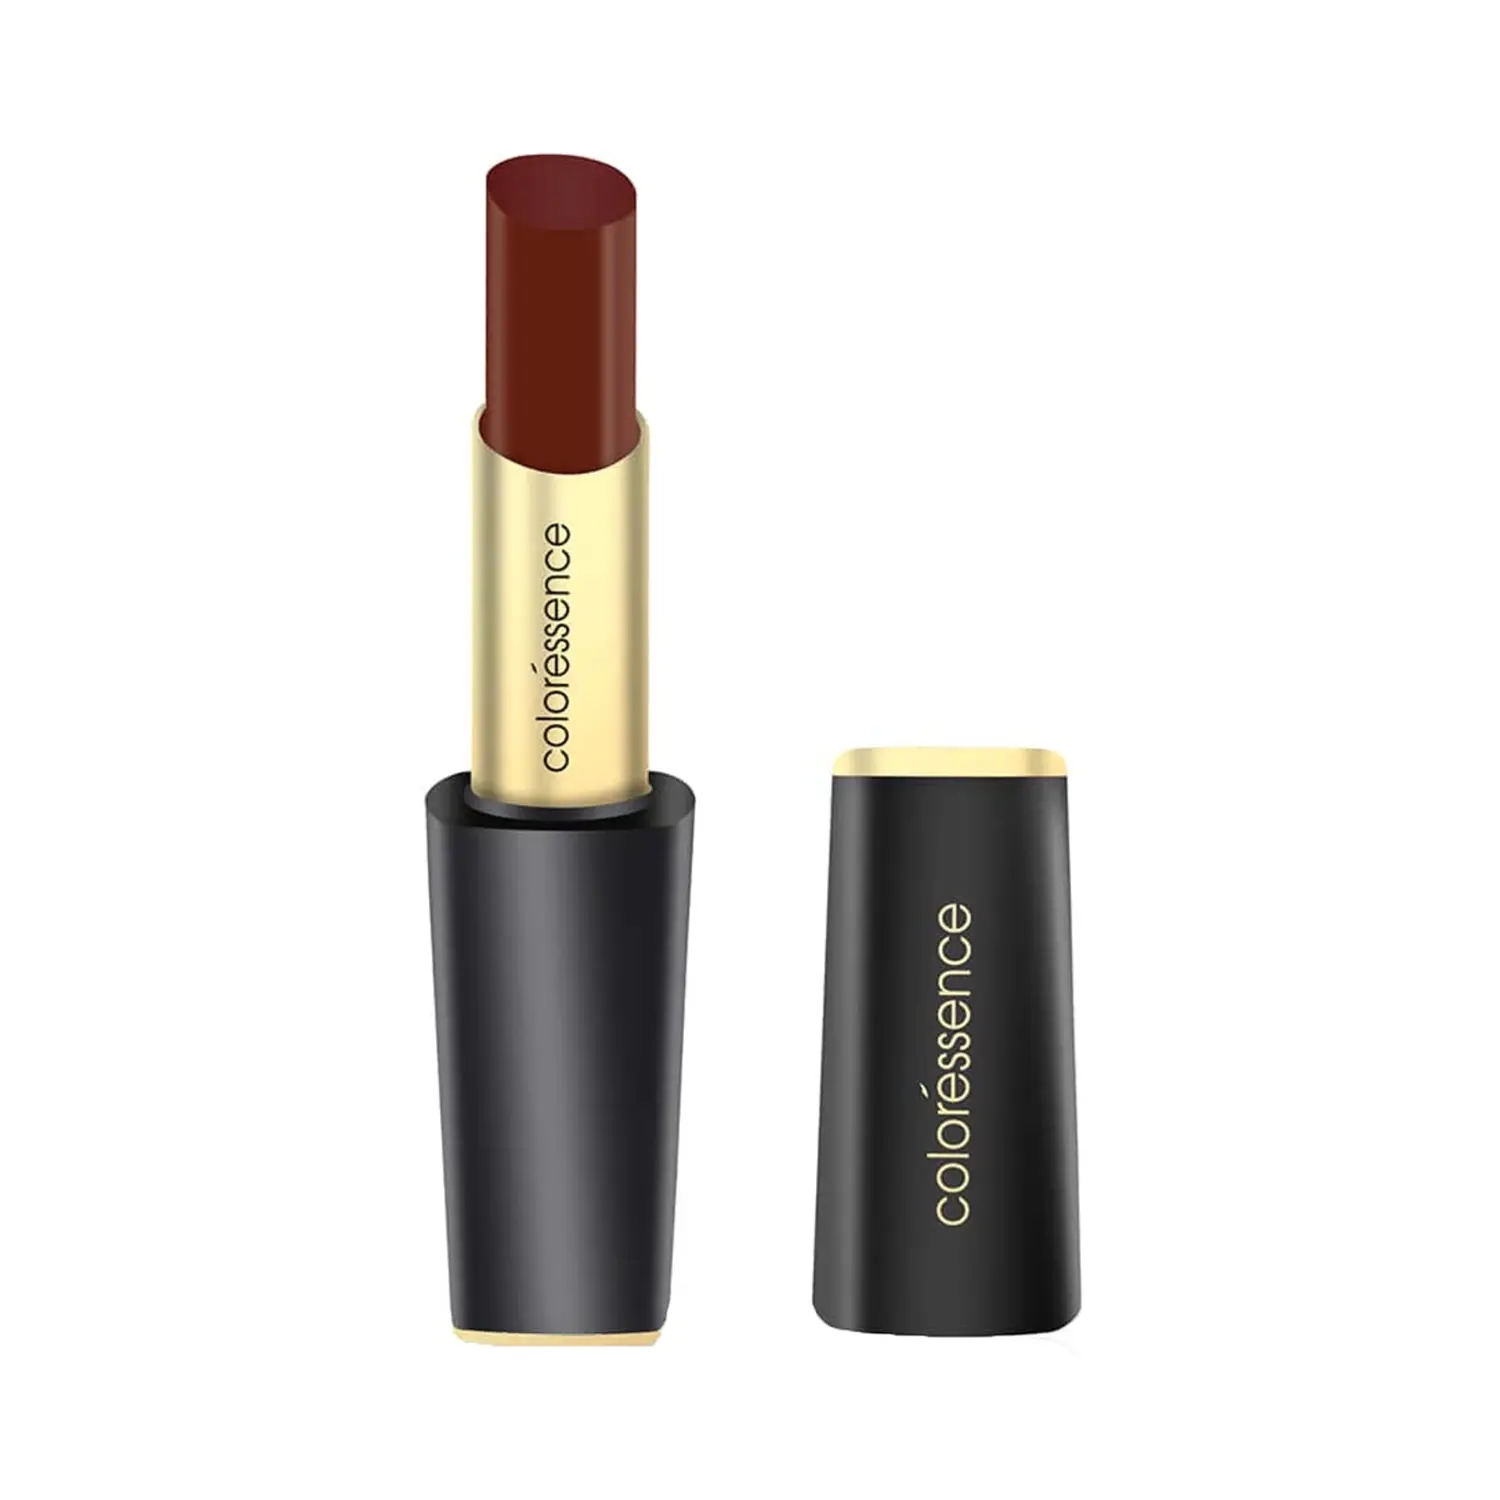 Coloressence Intense Long Wear Lip Color Glossy Lipstick - Autumn Rush (2.5g)